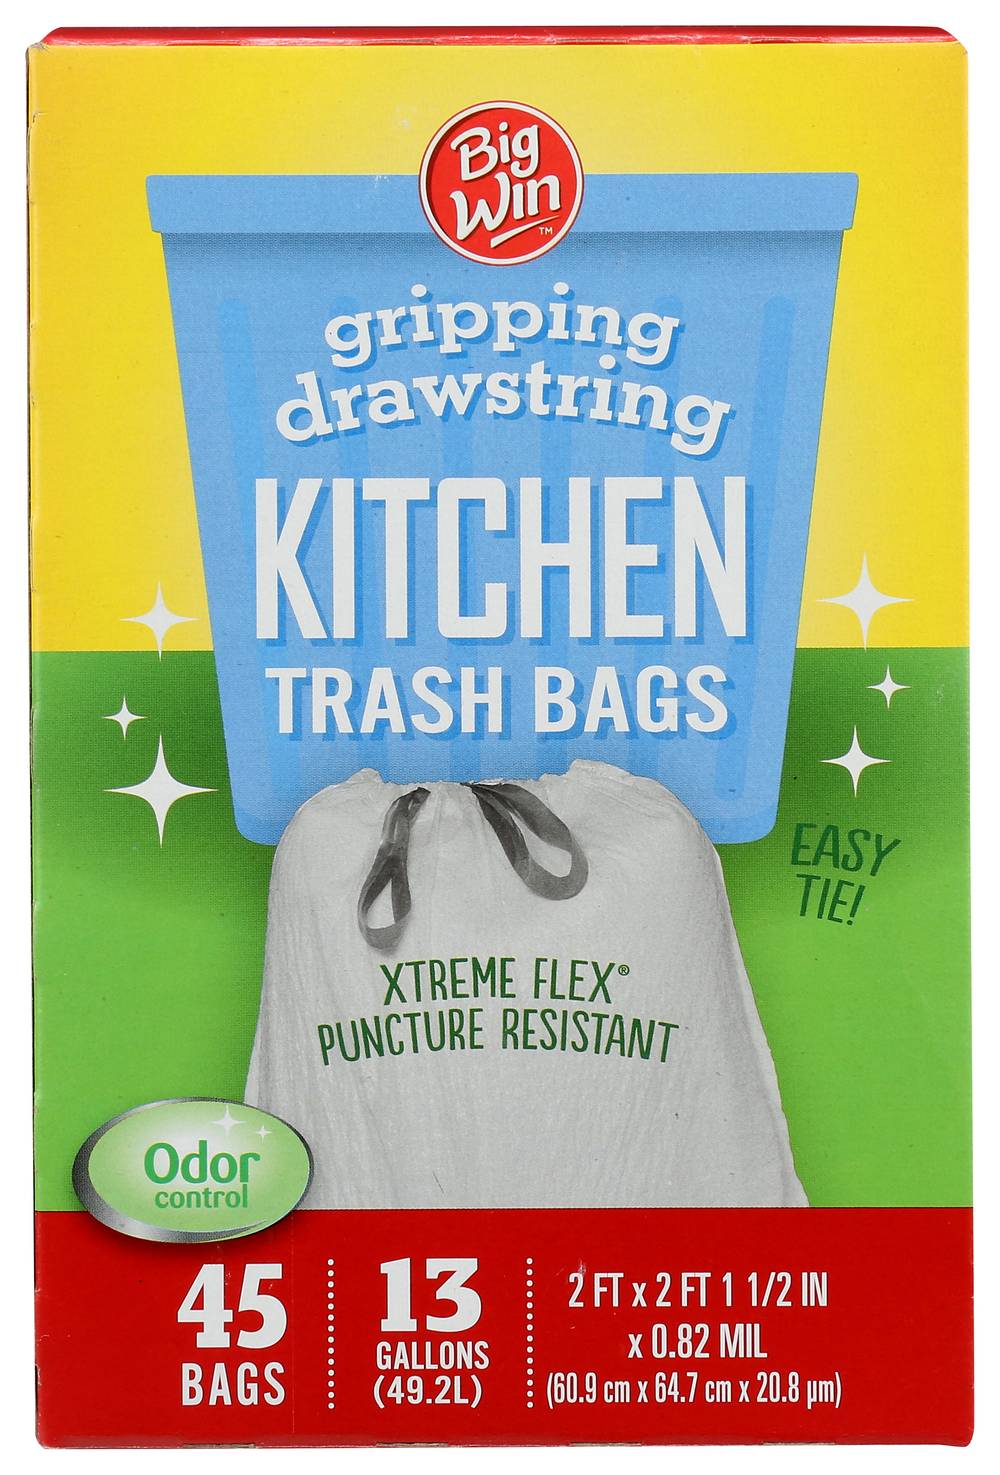 Big Win Gripping Drawstring Kitchen Trash Bags, 13 Gallon - 45 ct